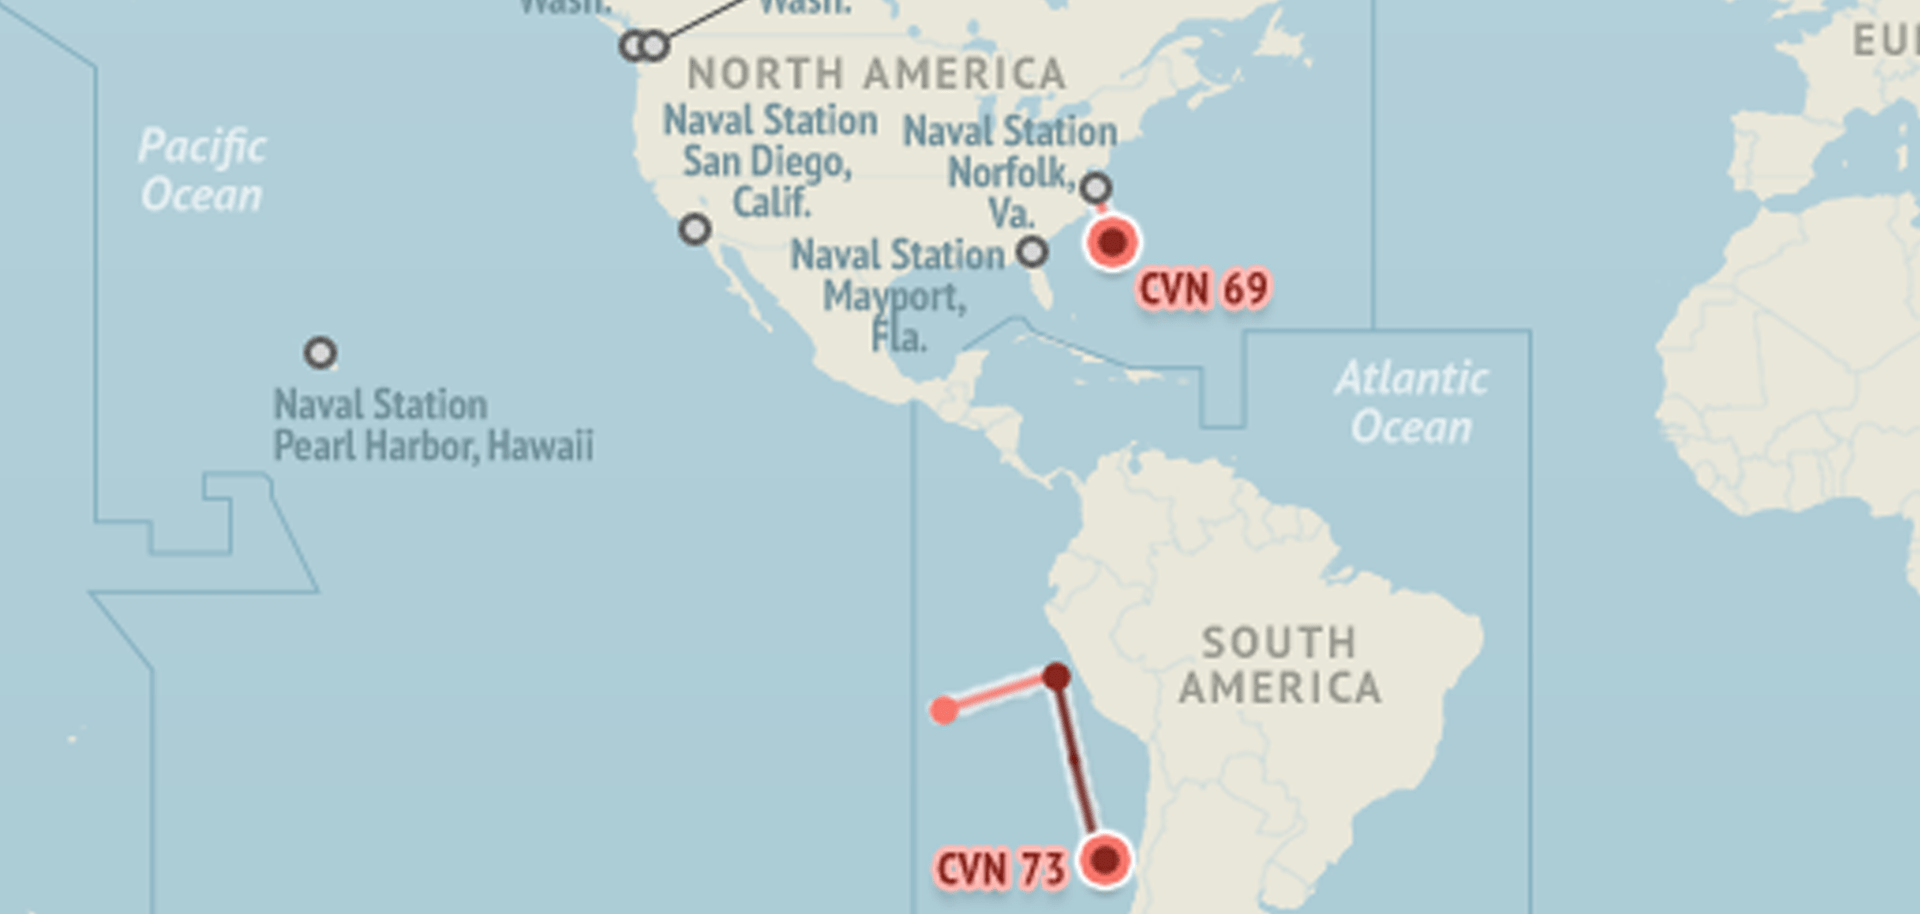 U.S. Naval Update Map: Oct. 15, 2015 DISPLAY